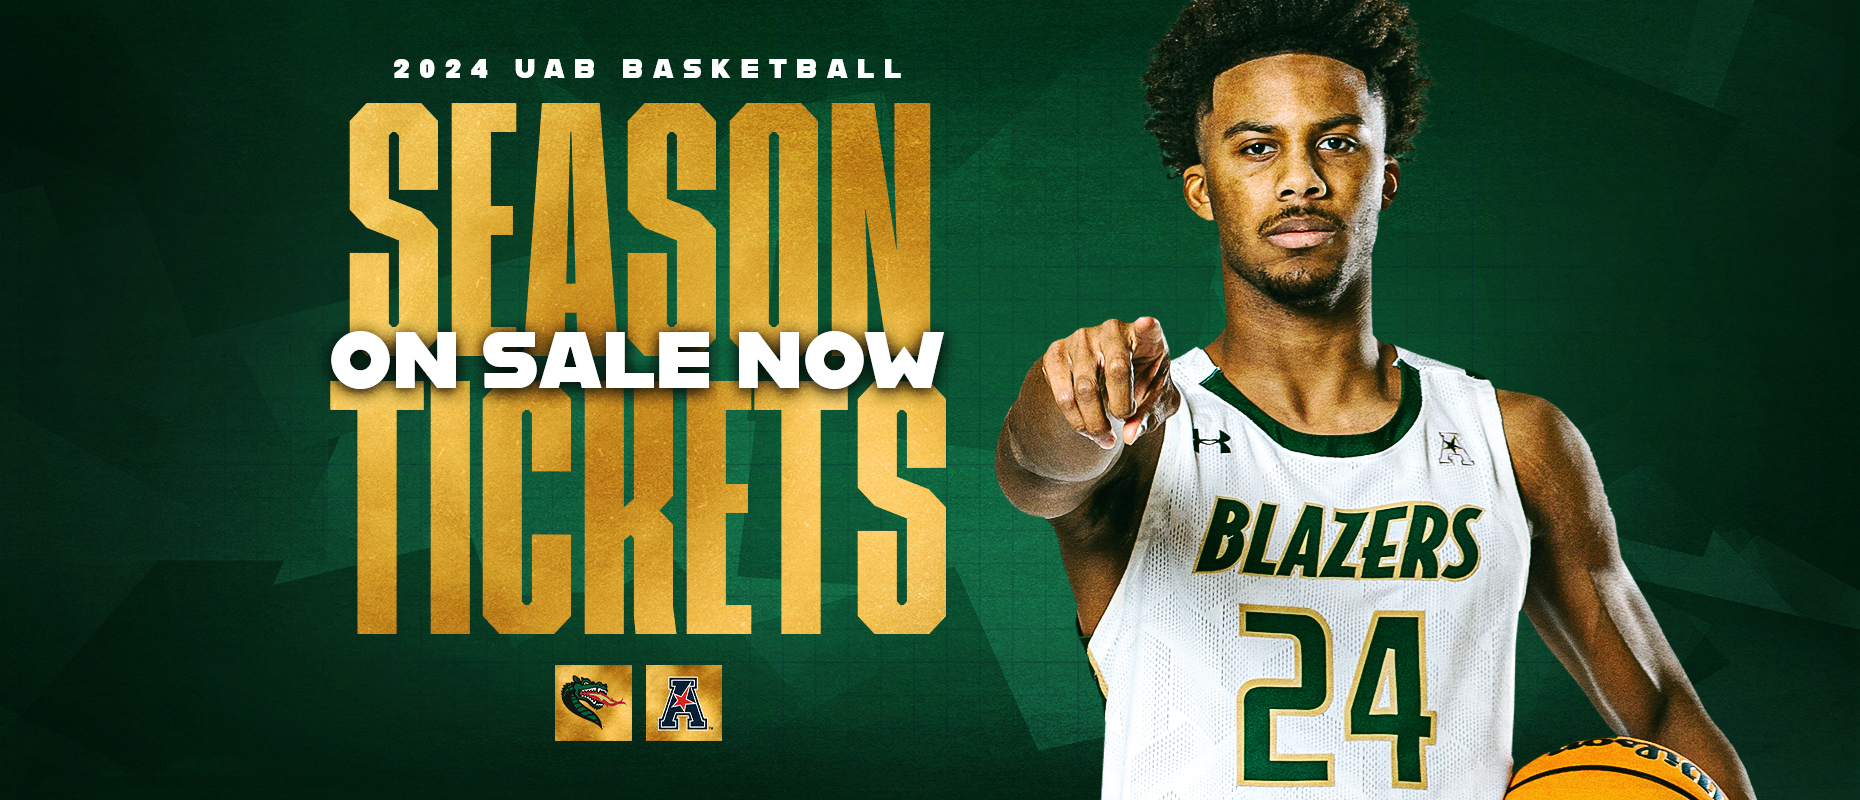 2024 UAB Basketball season tickets on sale now.